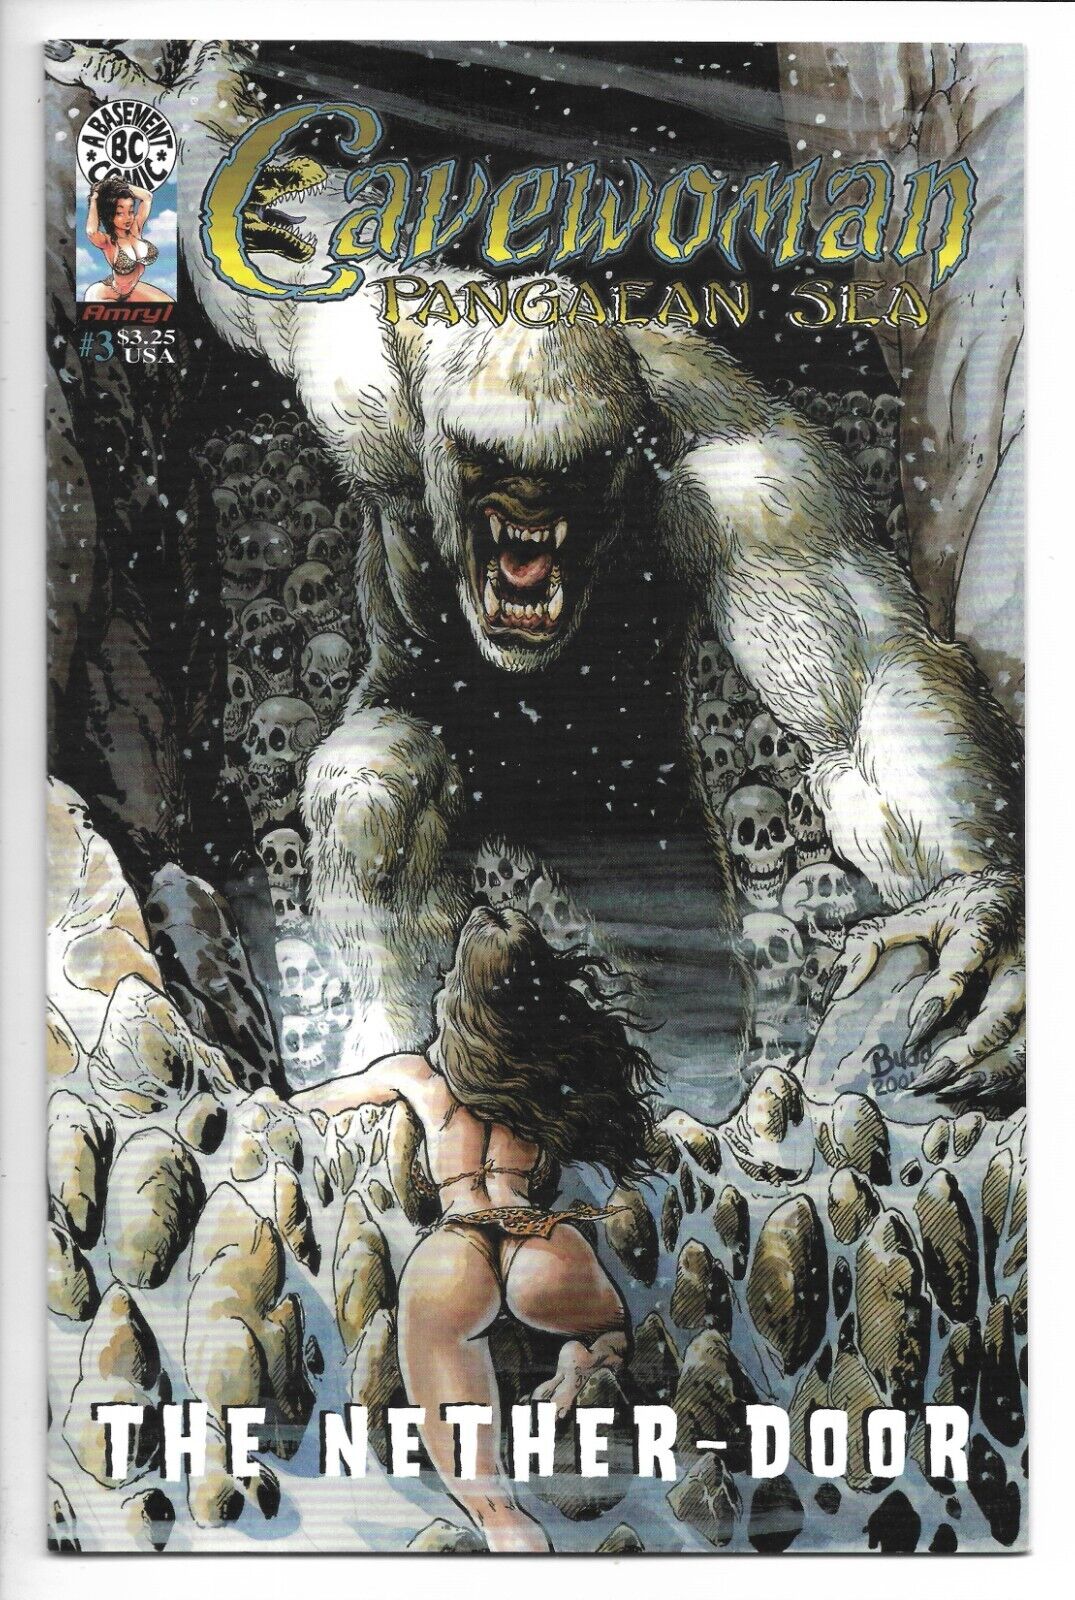 Cavewoman Pangaean Sea # 3 / Budd Root Cover / Meriem Cooper / 2002